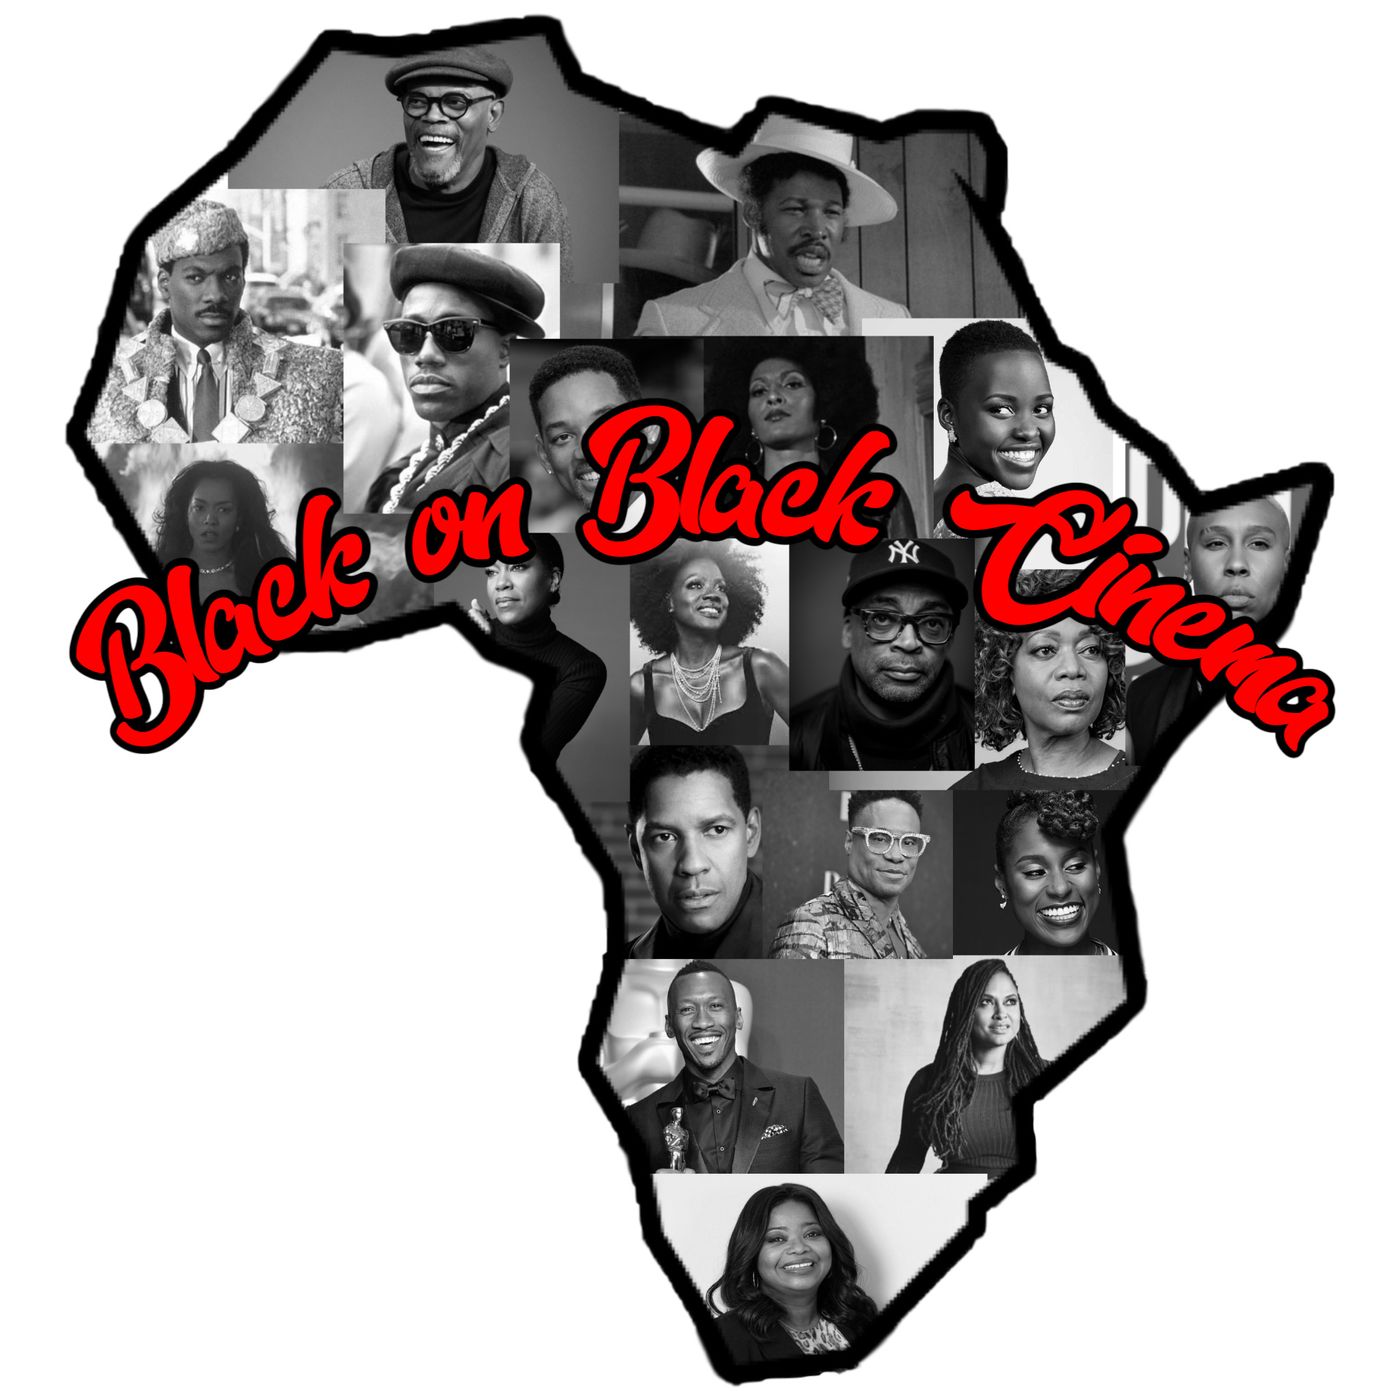 Black on Black Cinema - Black Film Reviews podcast show image